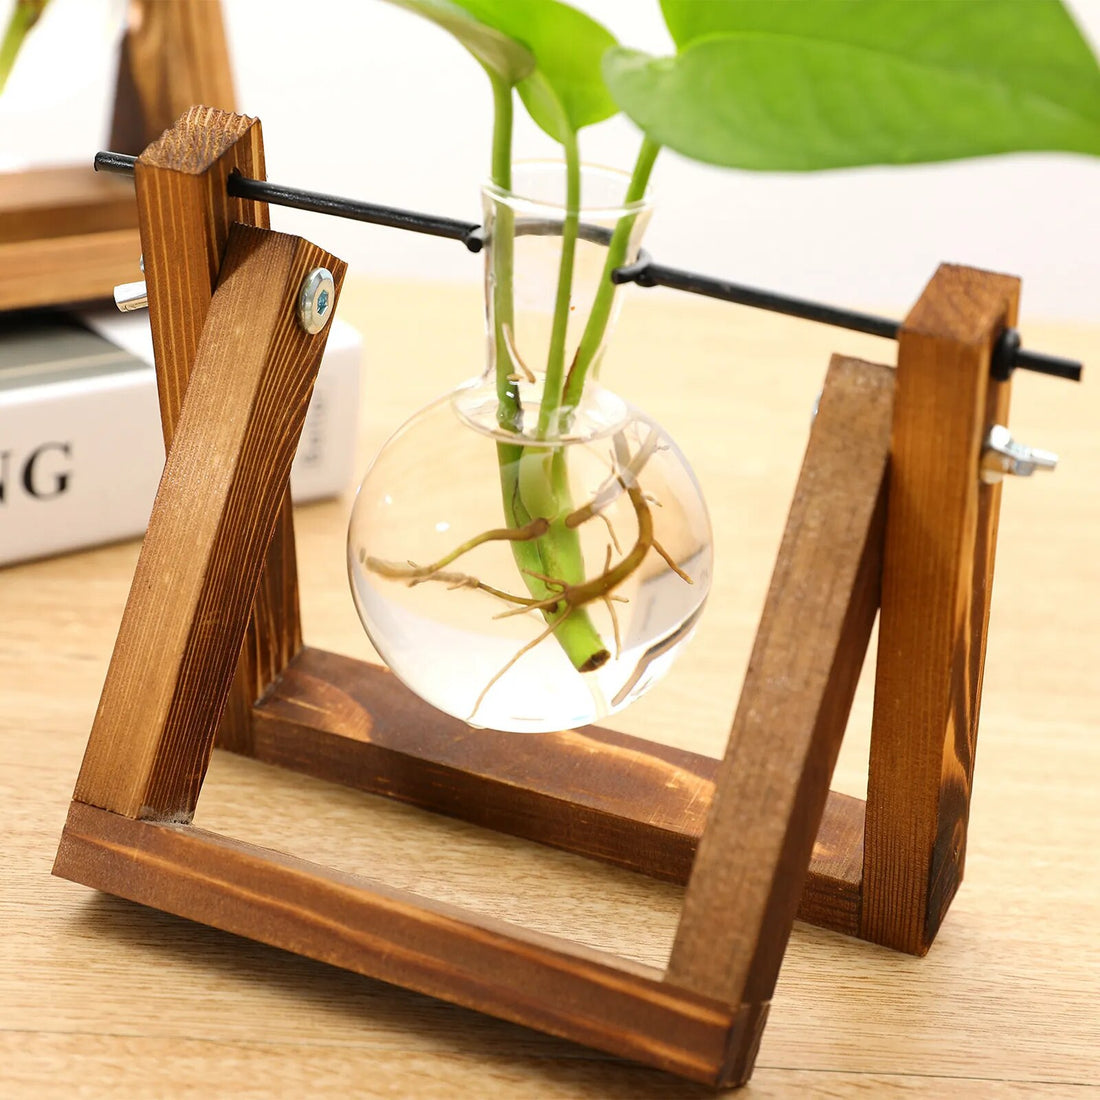 Propagation Station Glass Hydroponic Planter Bulb Terrarium Vase with Retro Wooden Stand for Hydroponics Plants Table Decor